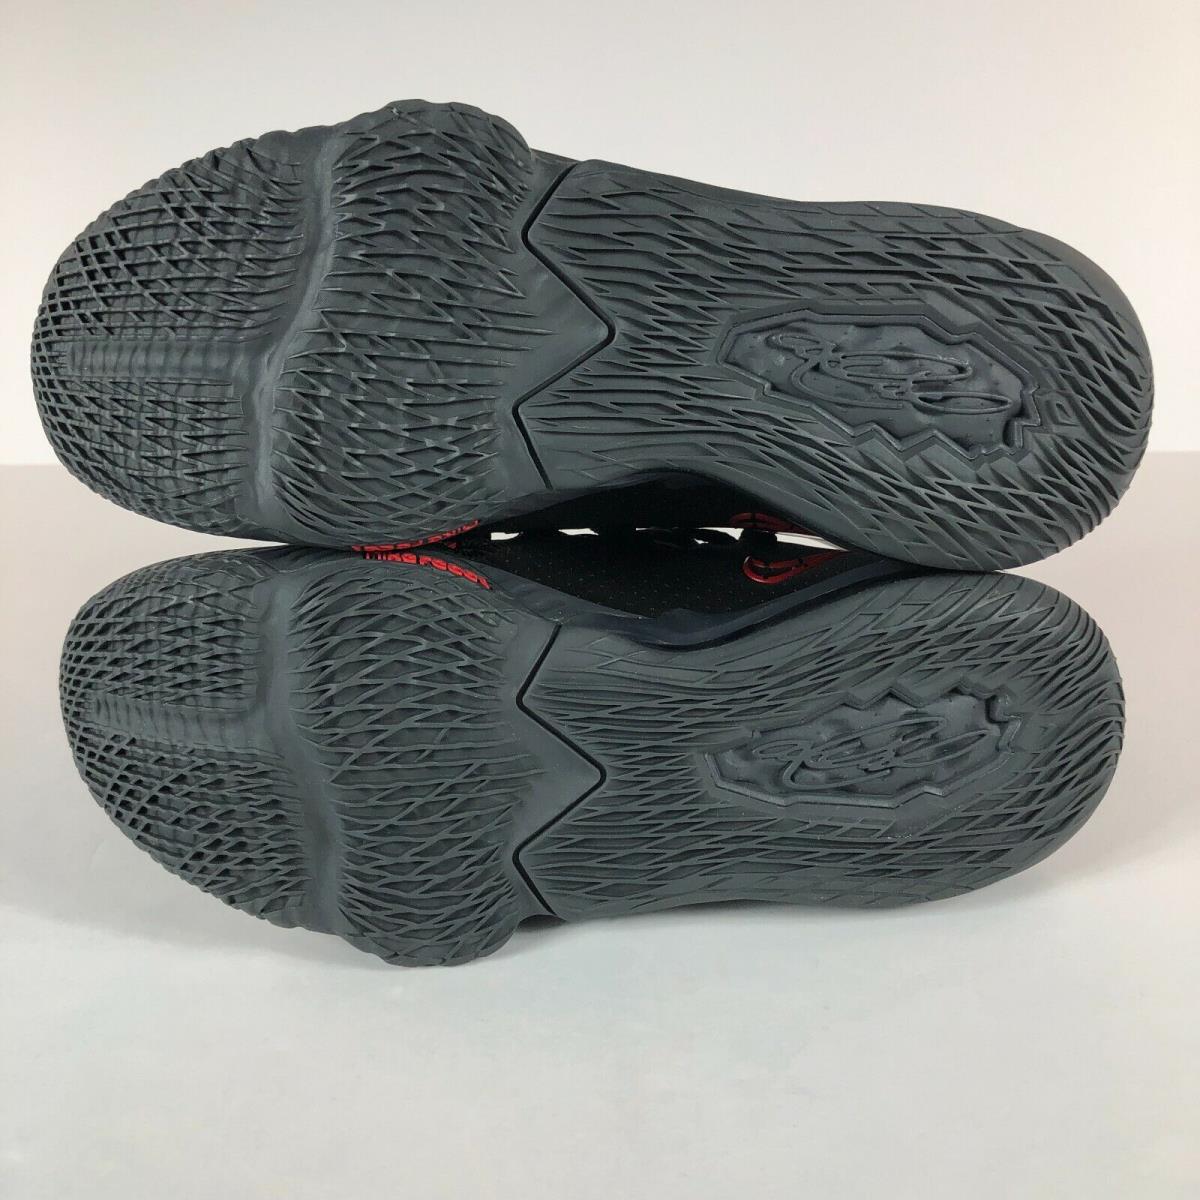 Nike shoes LeBron - Black 5